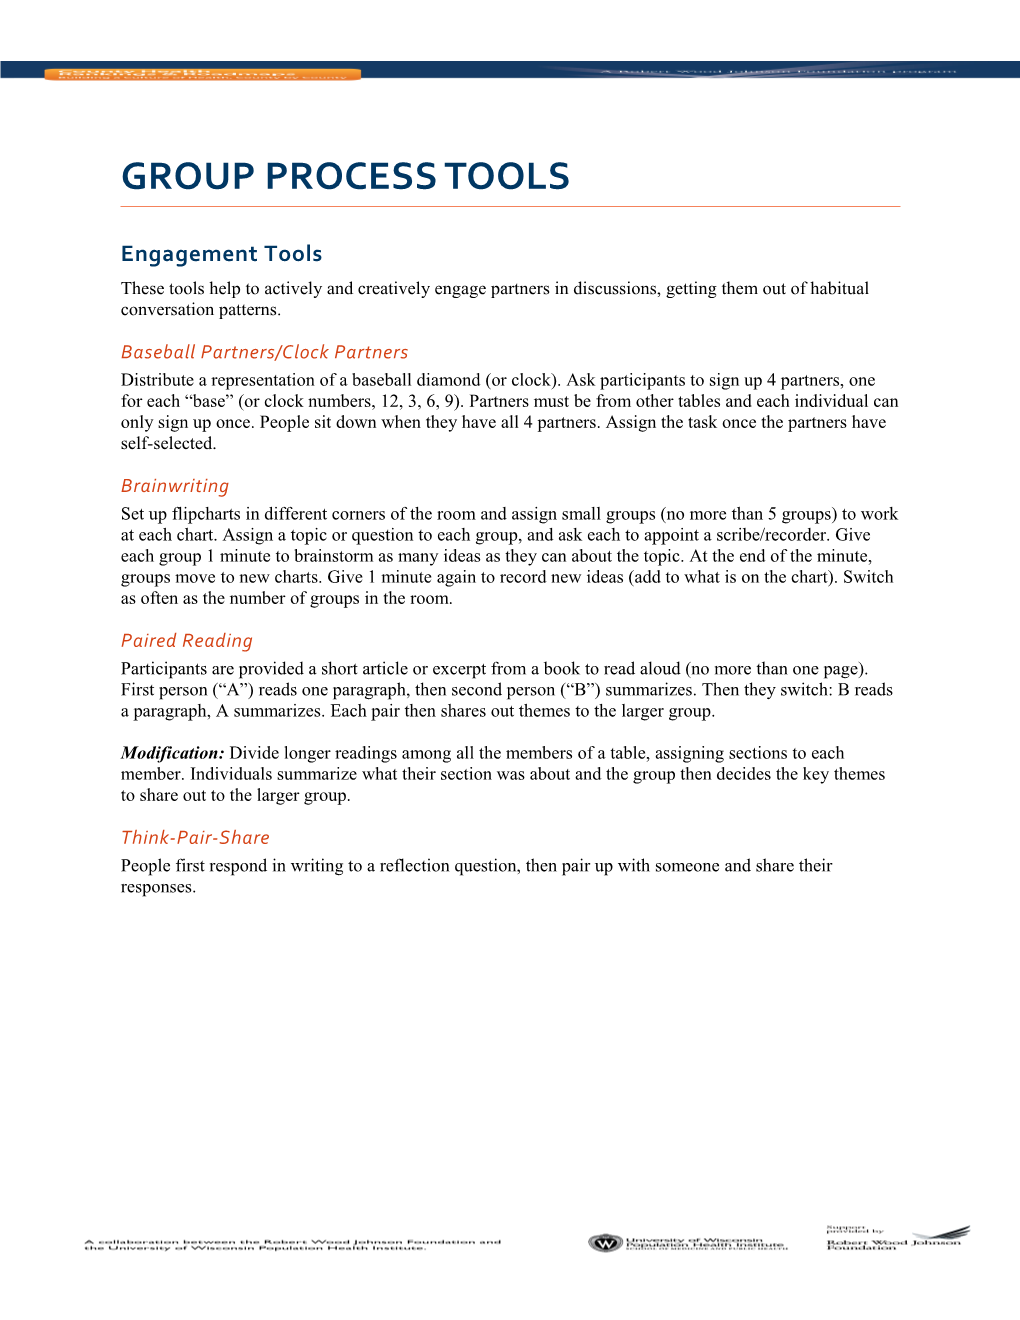 Group Process Tools